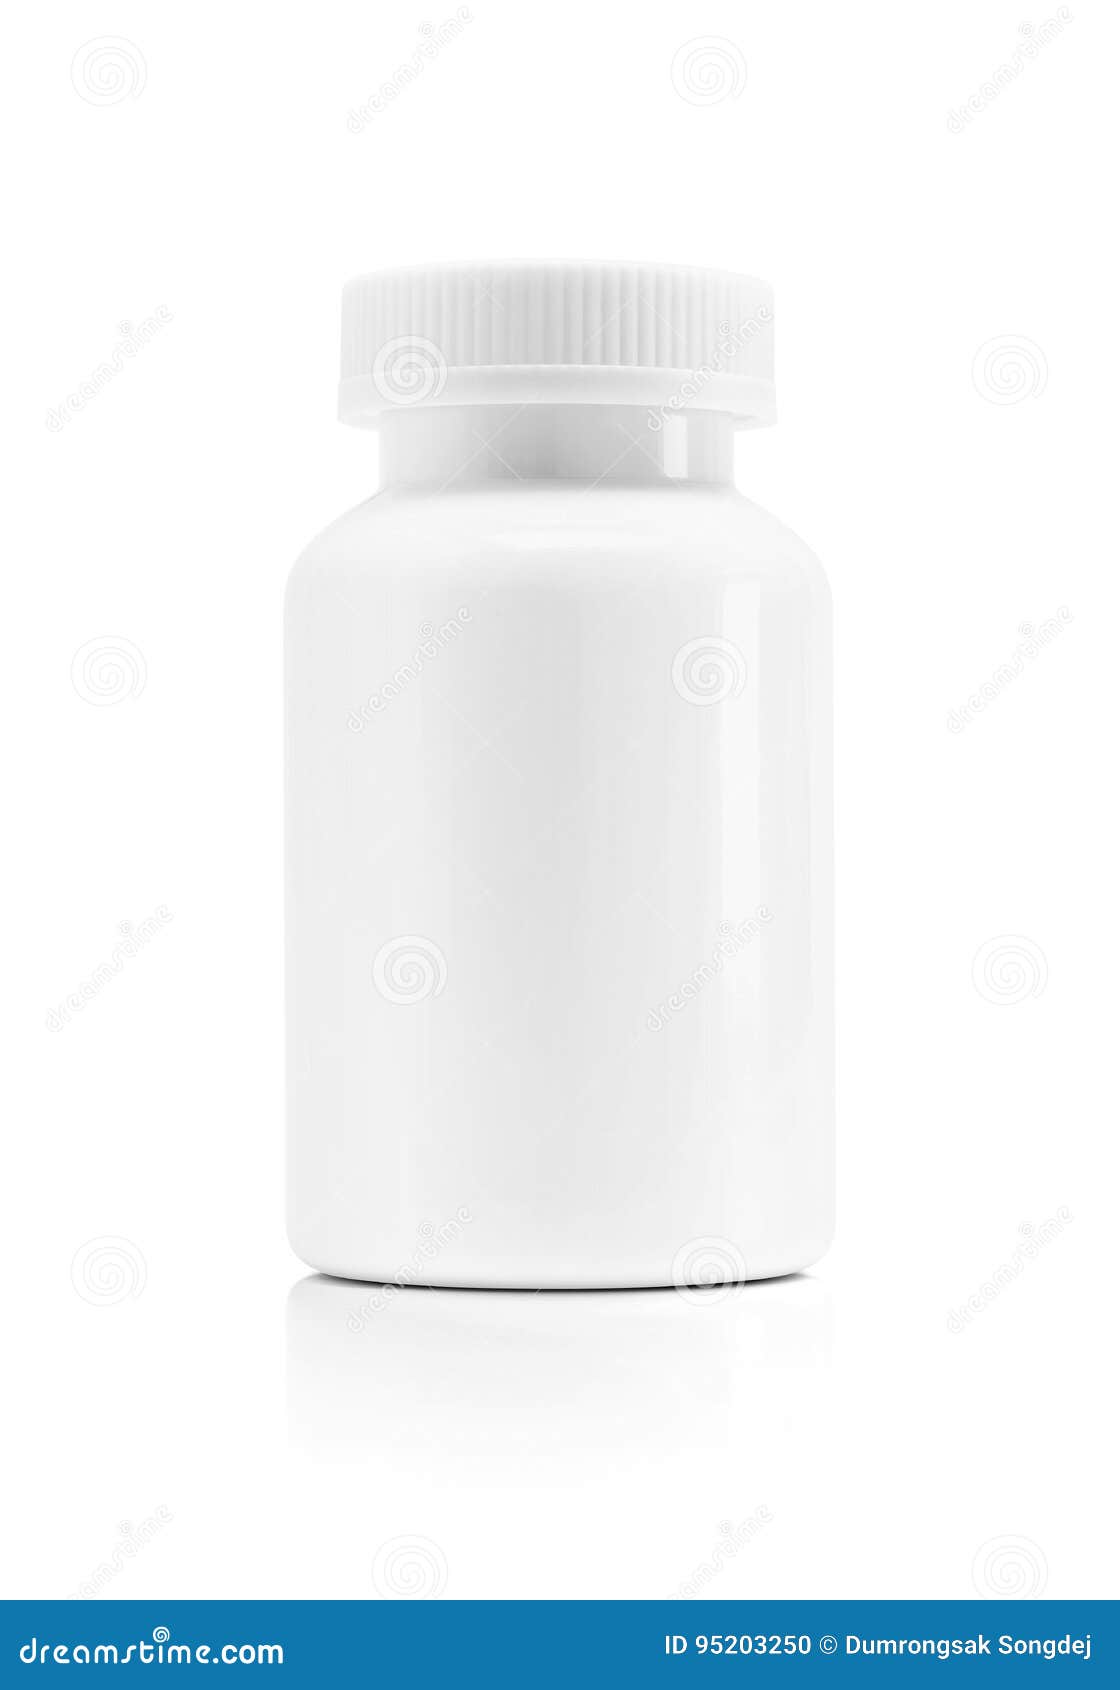 blank packaging white plastic bottle for supplement product